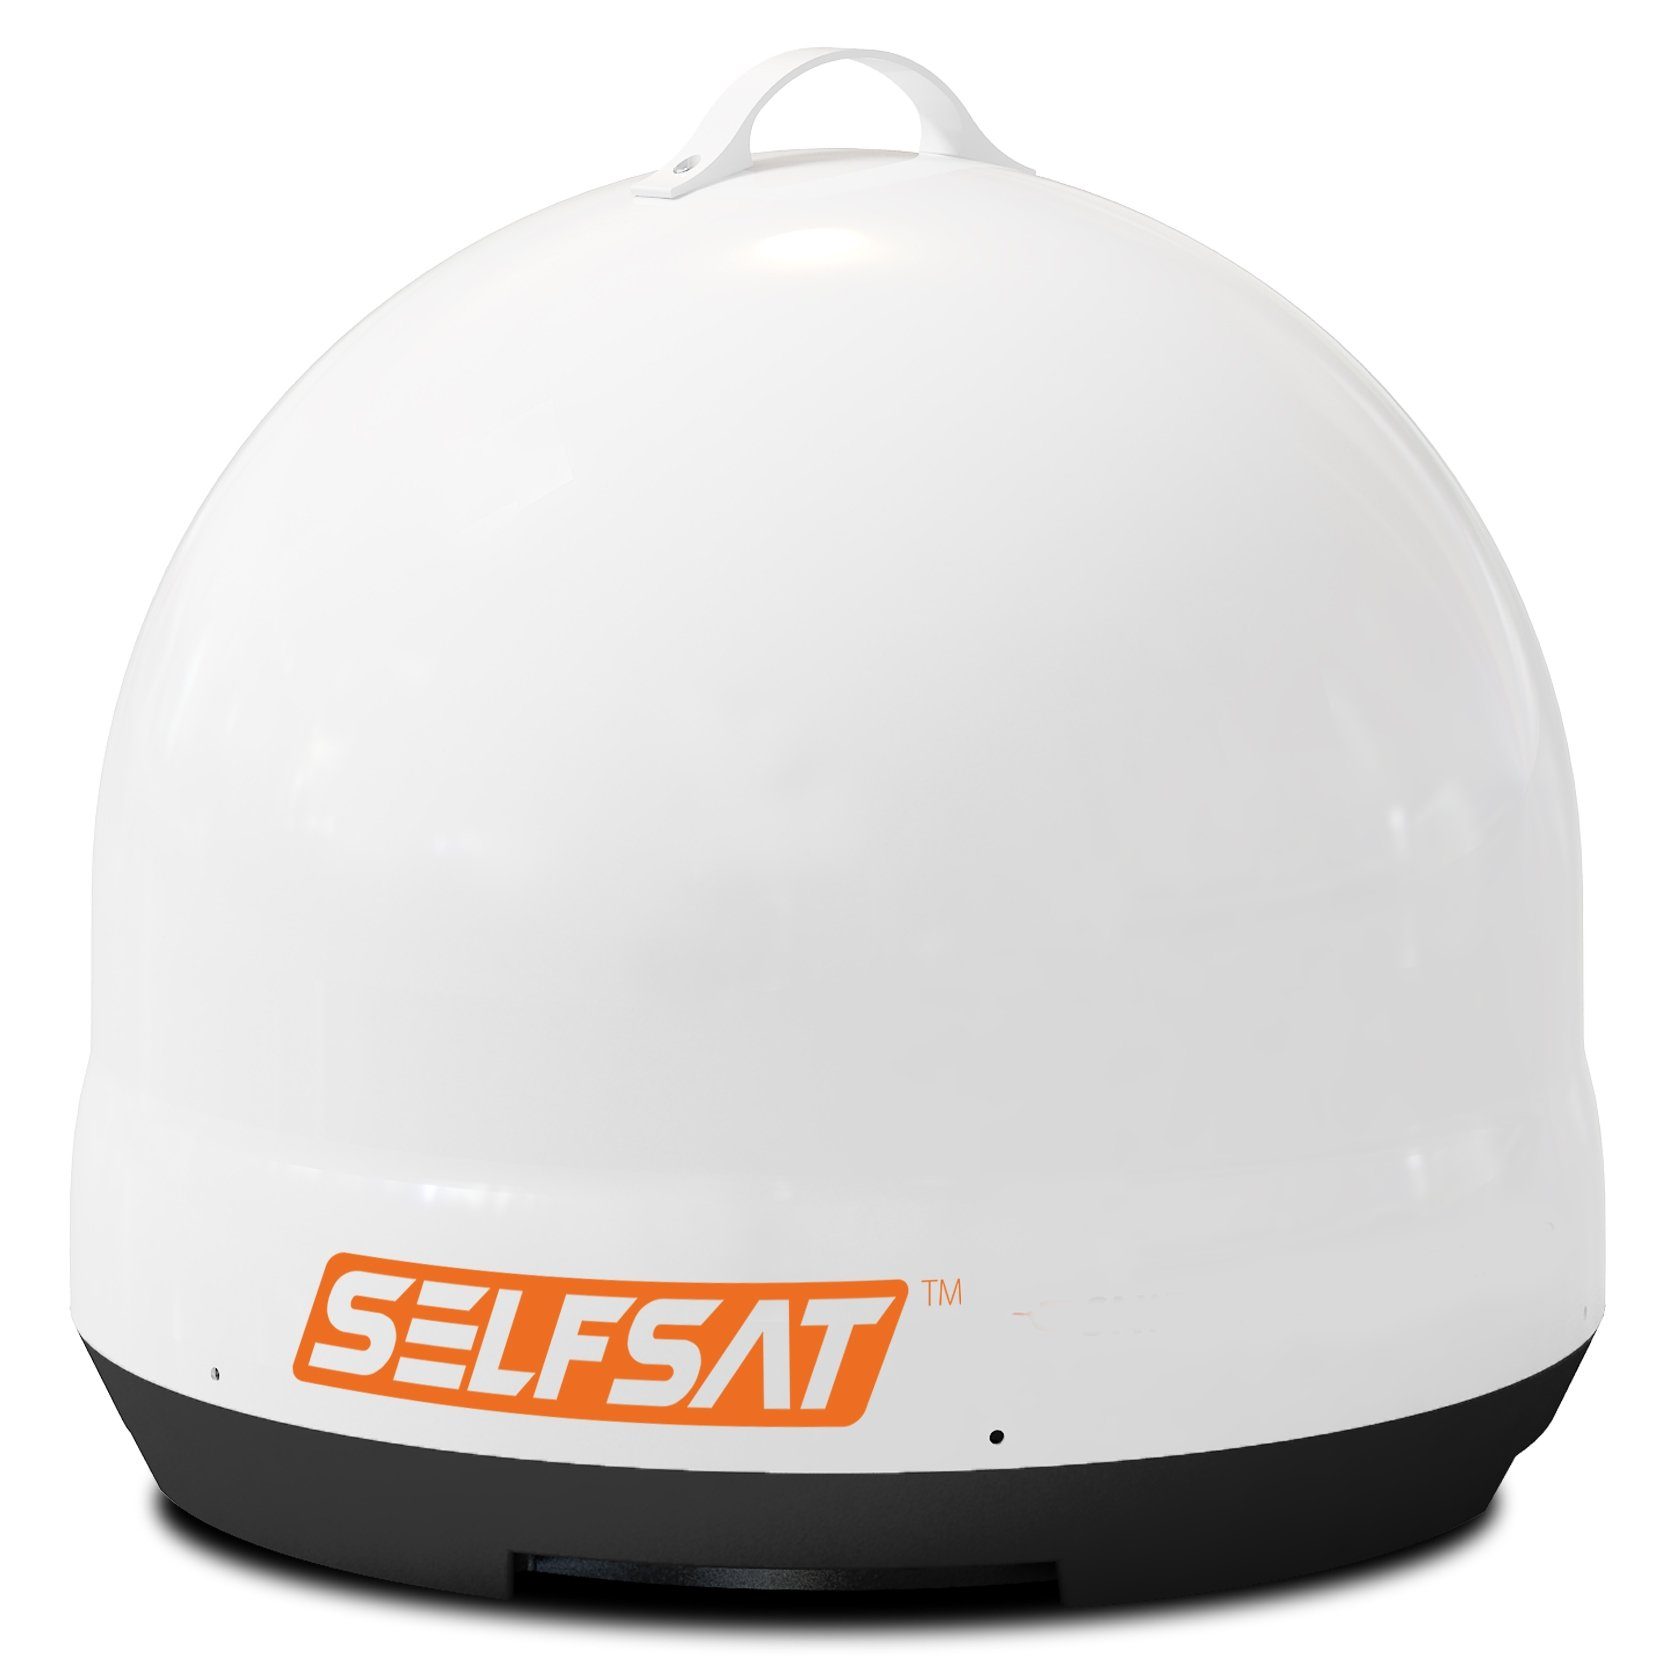 Selfsat Selfsat SNIPE Mobil Camp Direct Portable mobile Satelliten